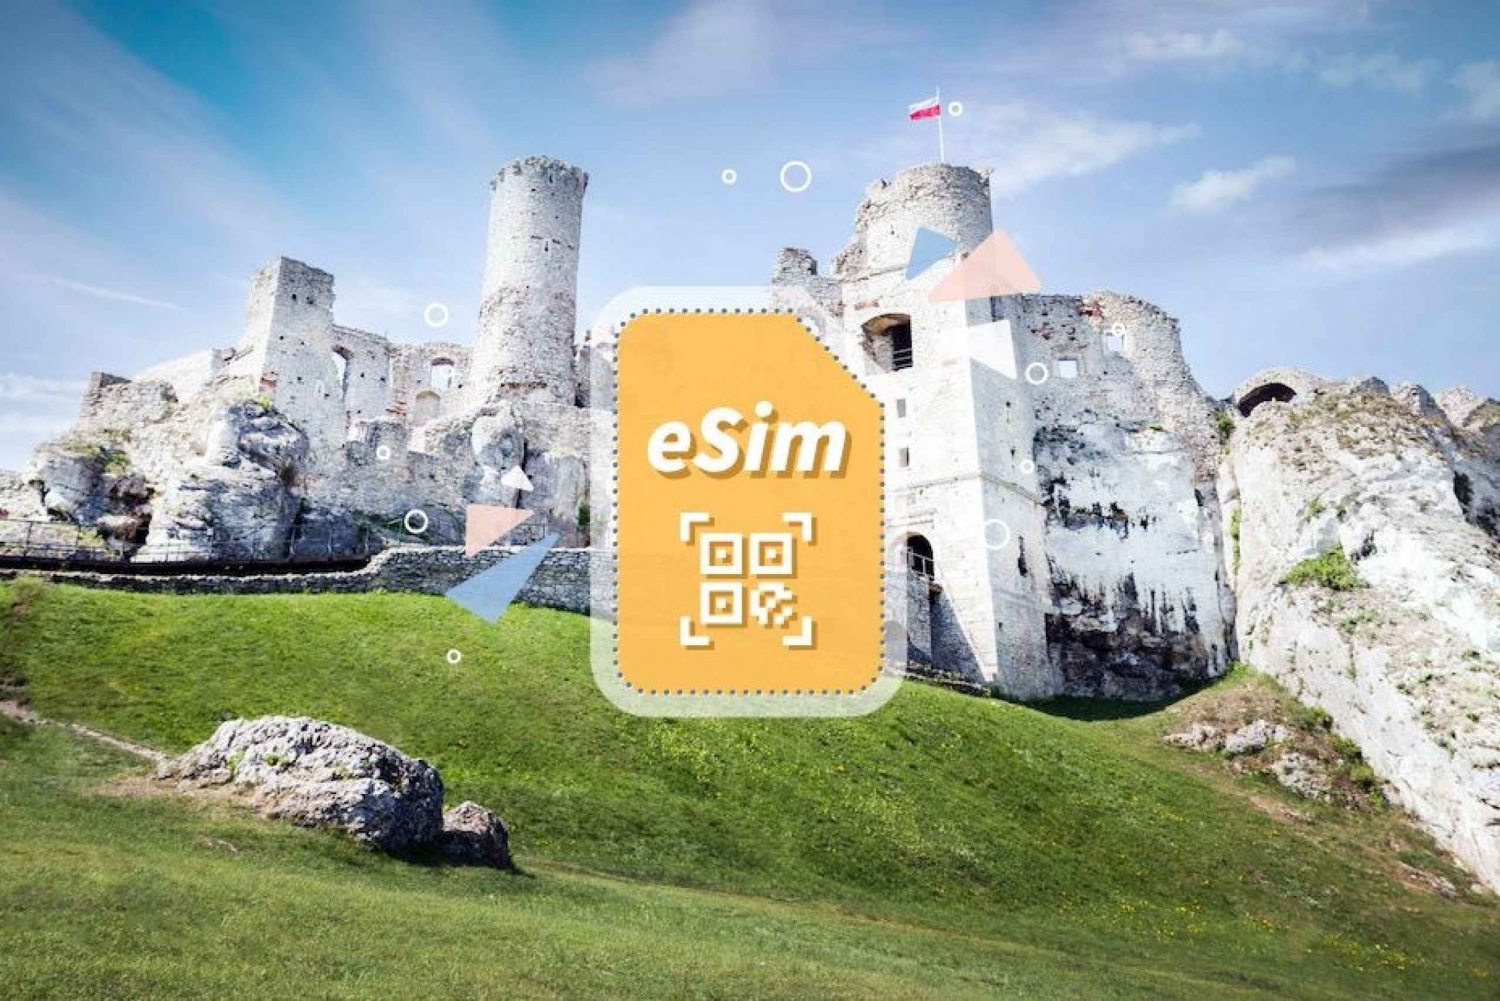 Polen/Europa: 5G eSim mobildatapaket